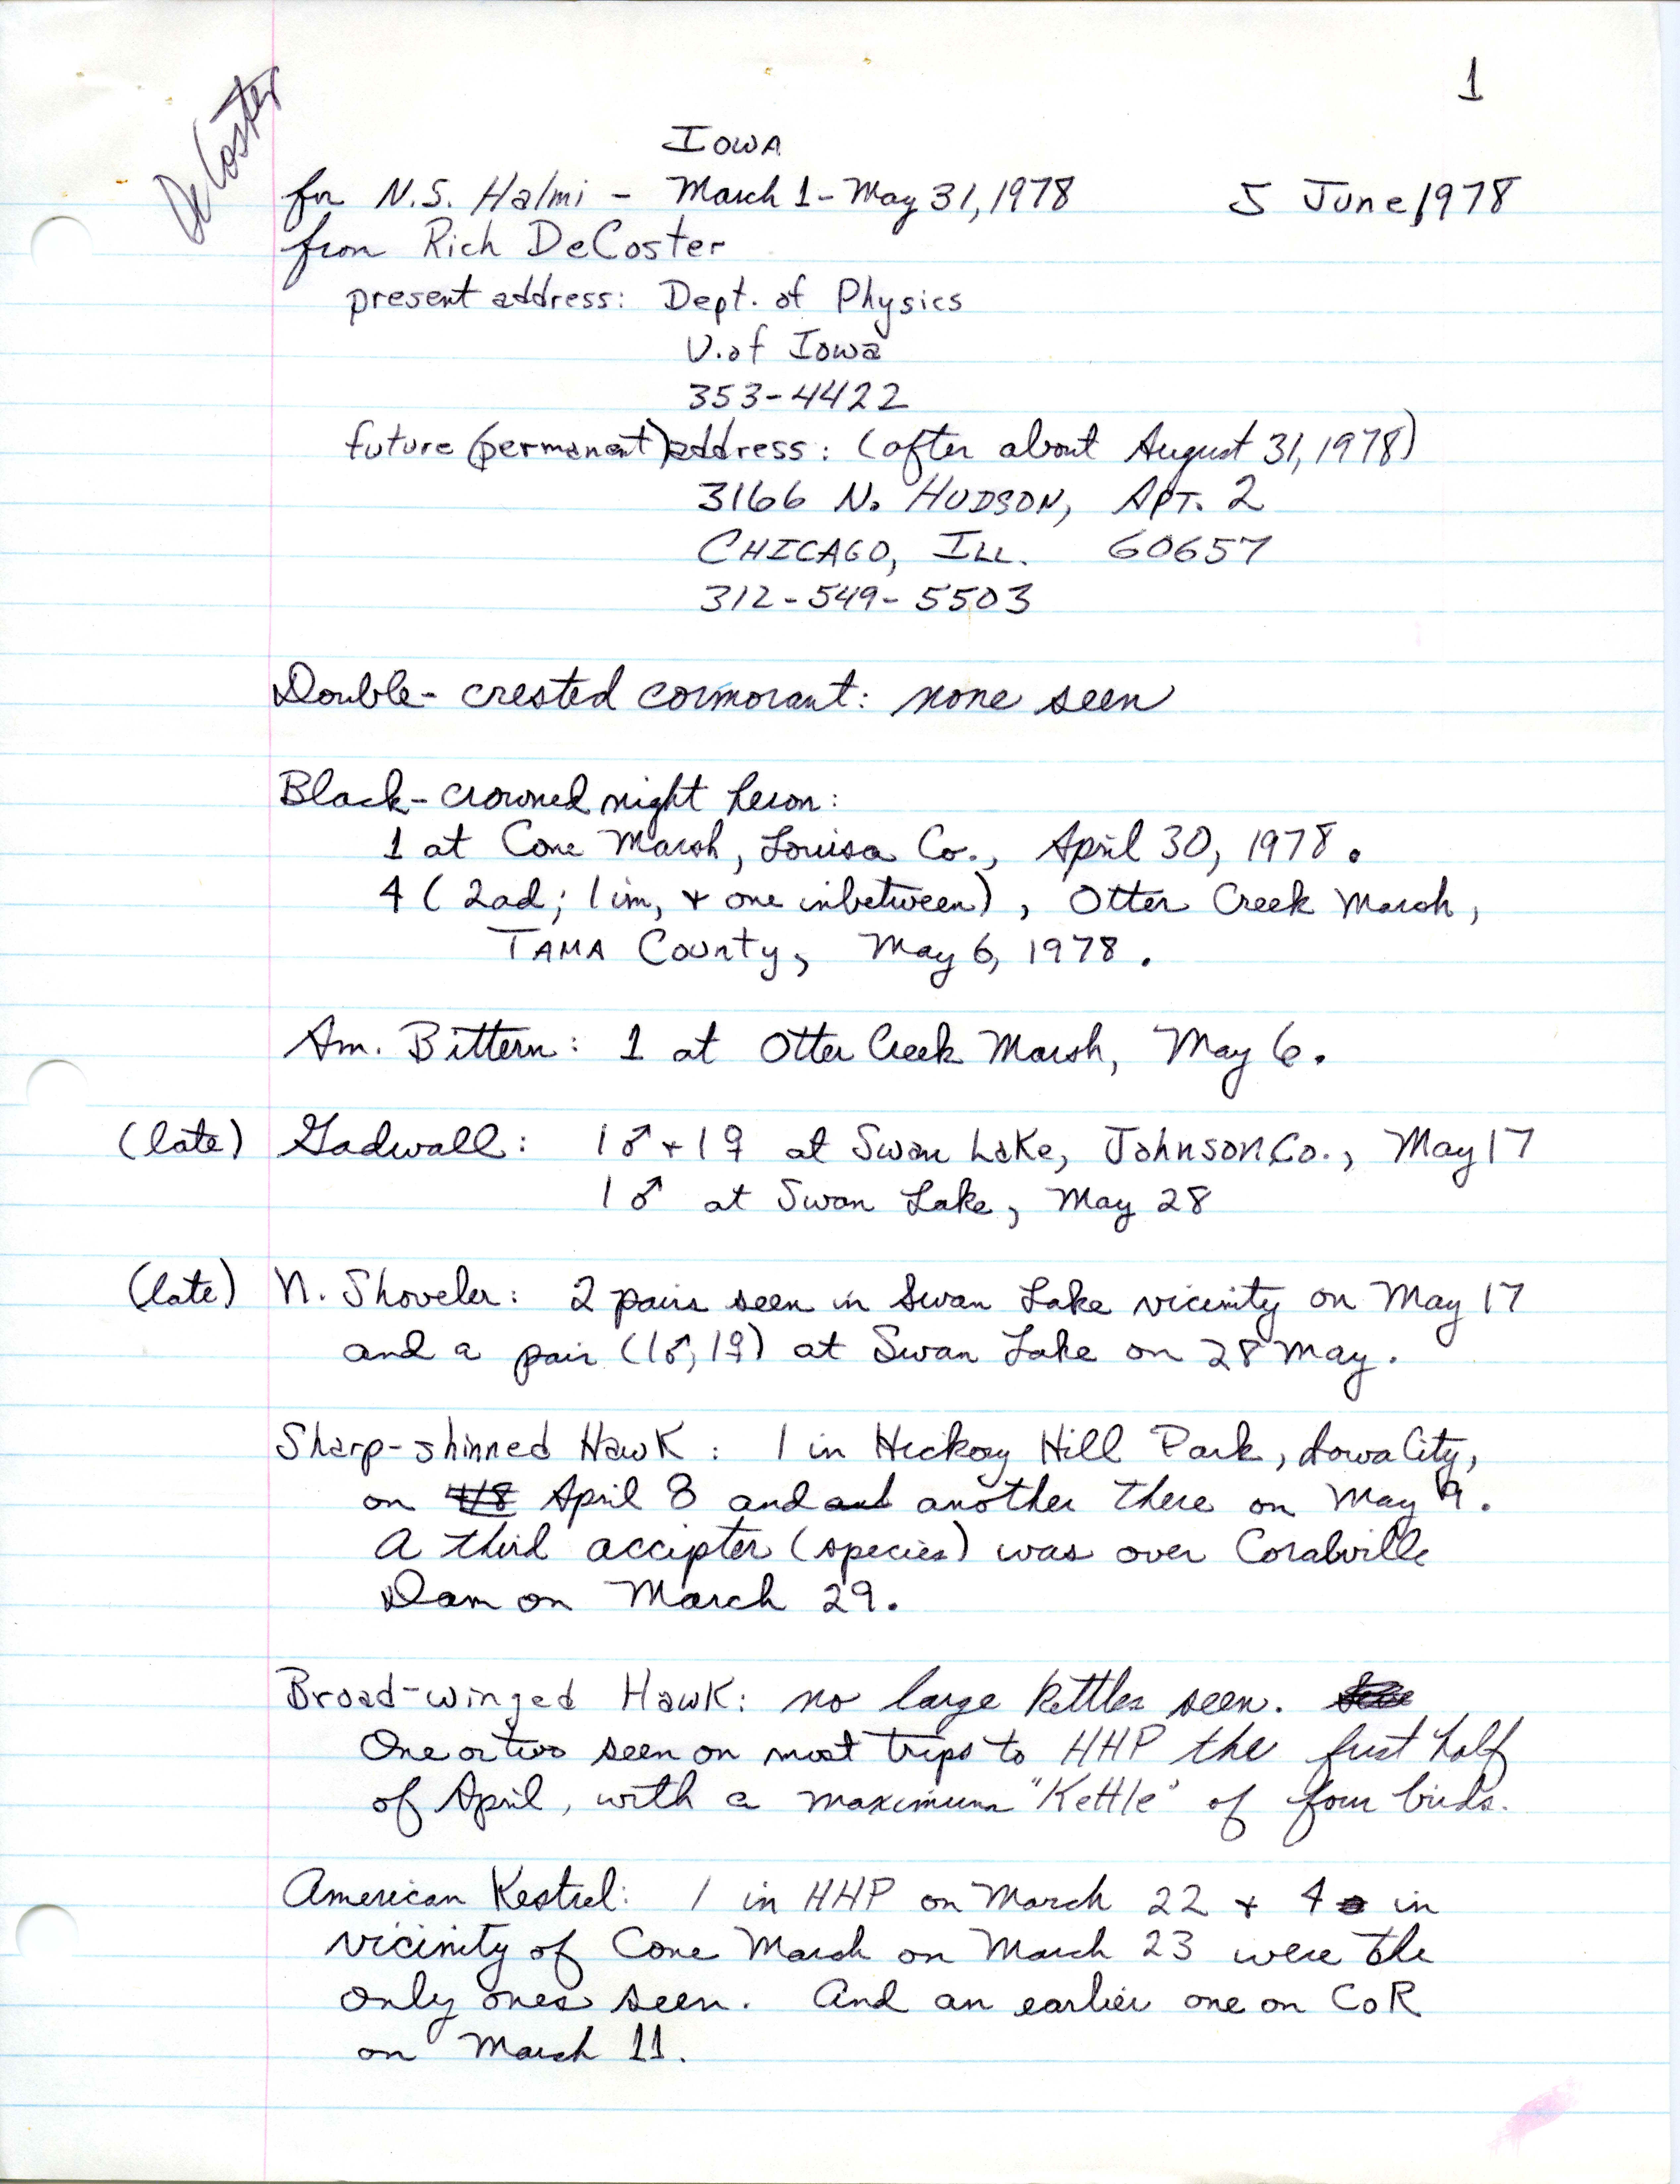 Rich DeCoster letter to Nicholas S. Halmi regarding bird sightings, June 5, 1978